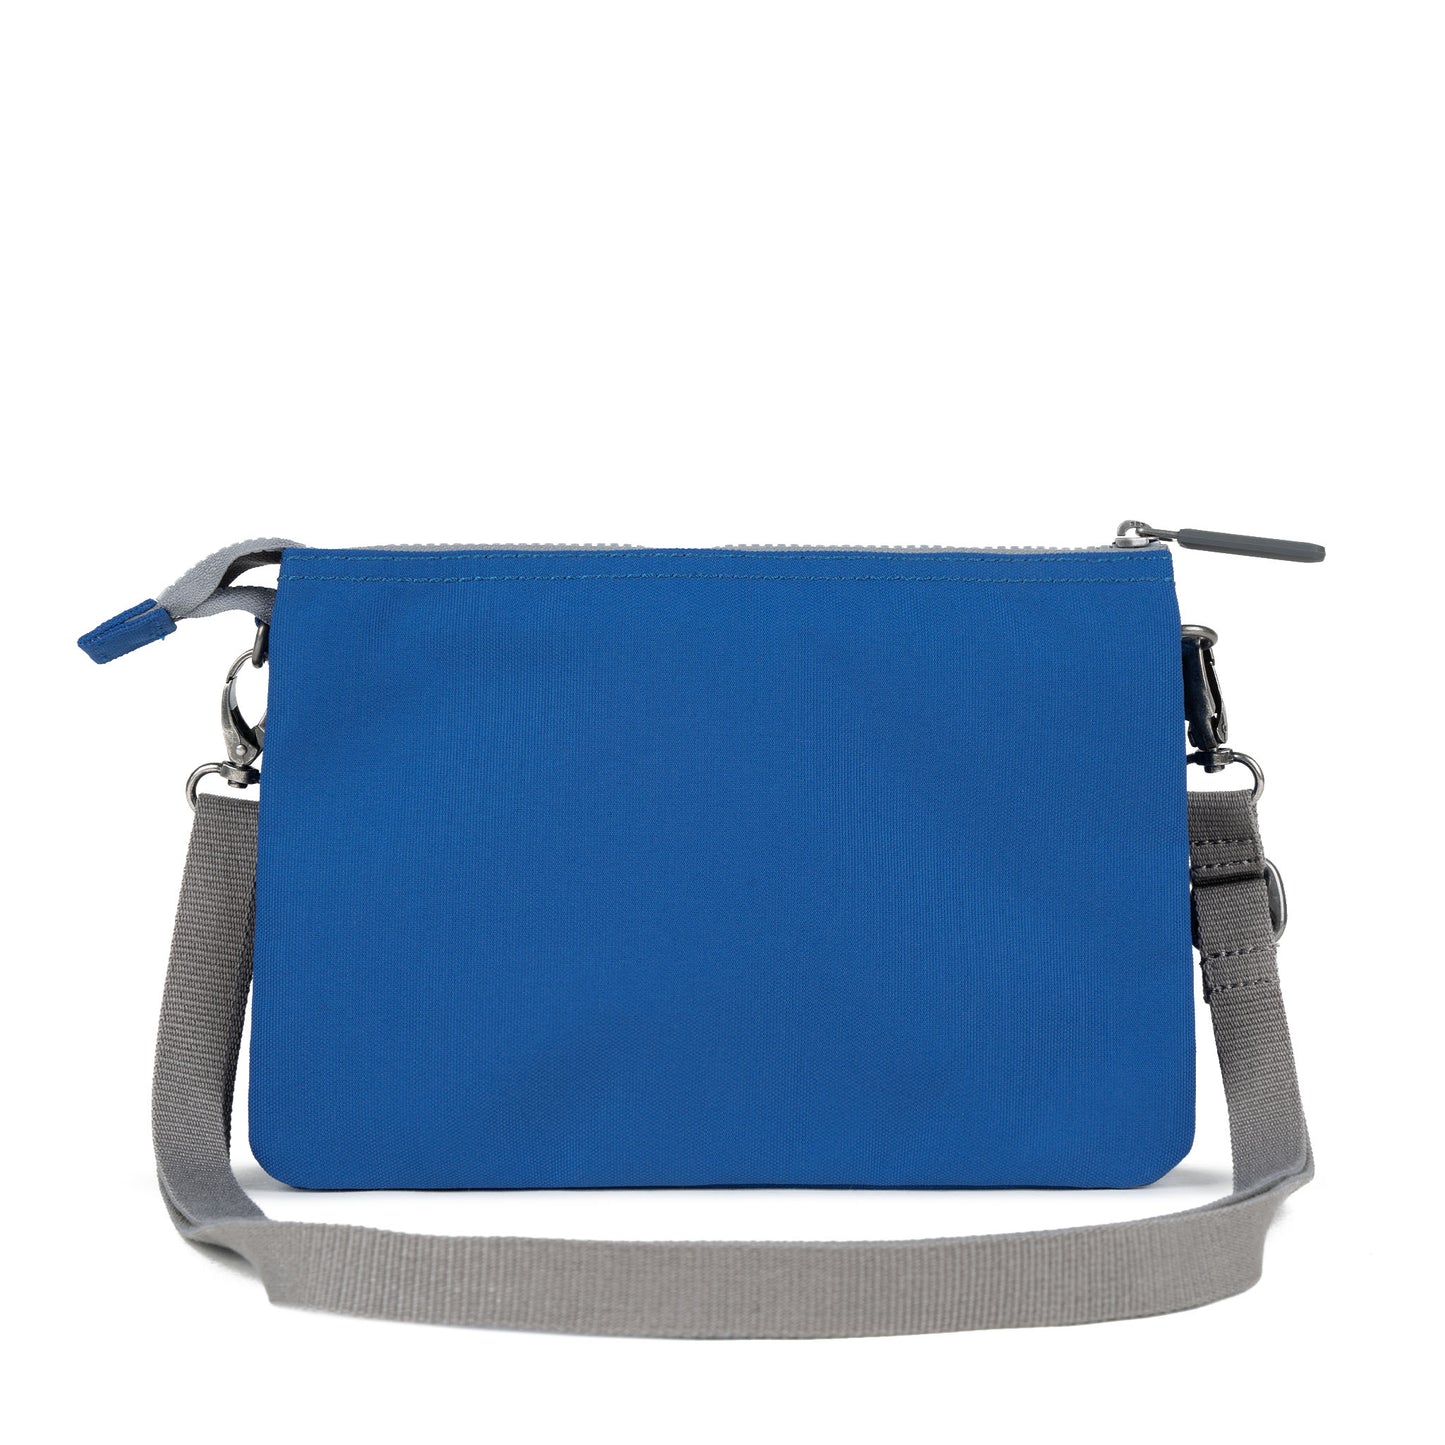 Roka London Carnaby Crossbody Bag, Galactic Blue (Sustainable Canvas)